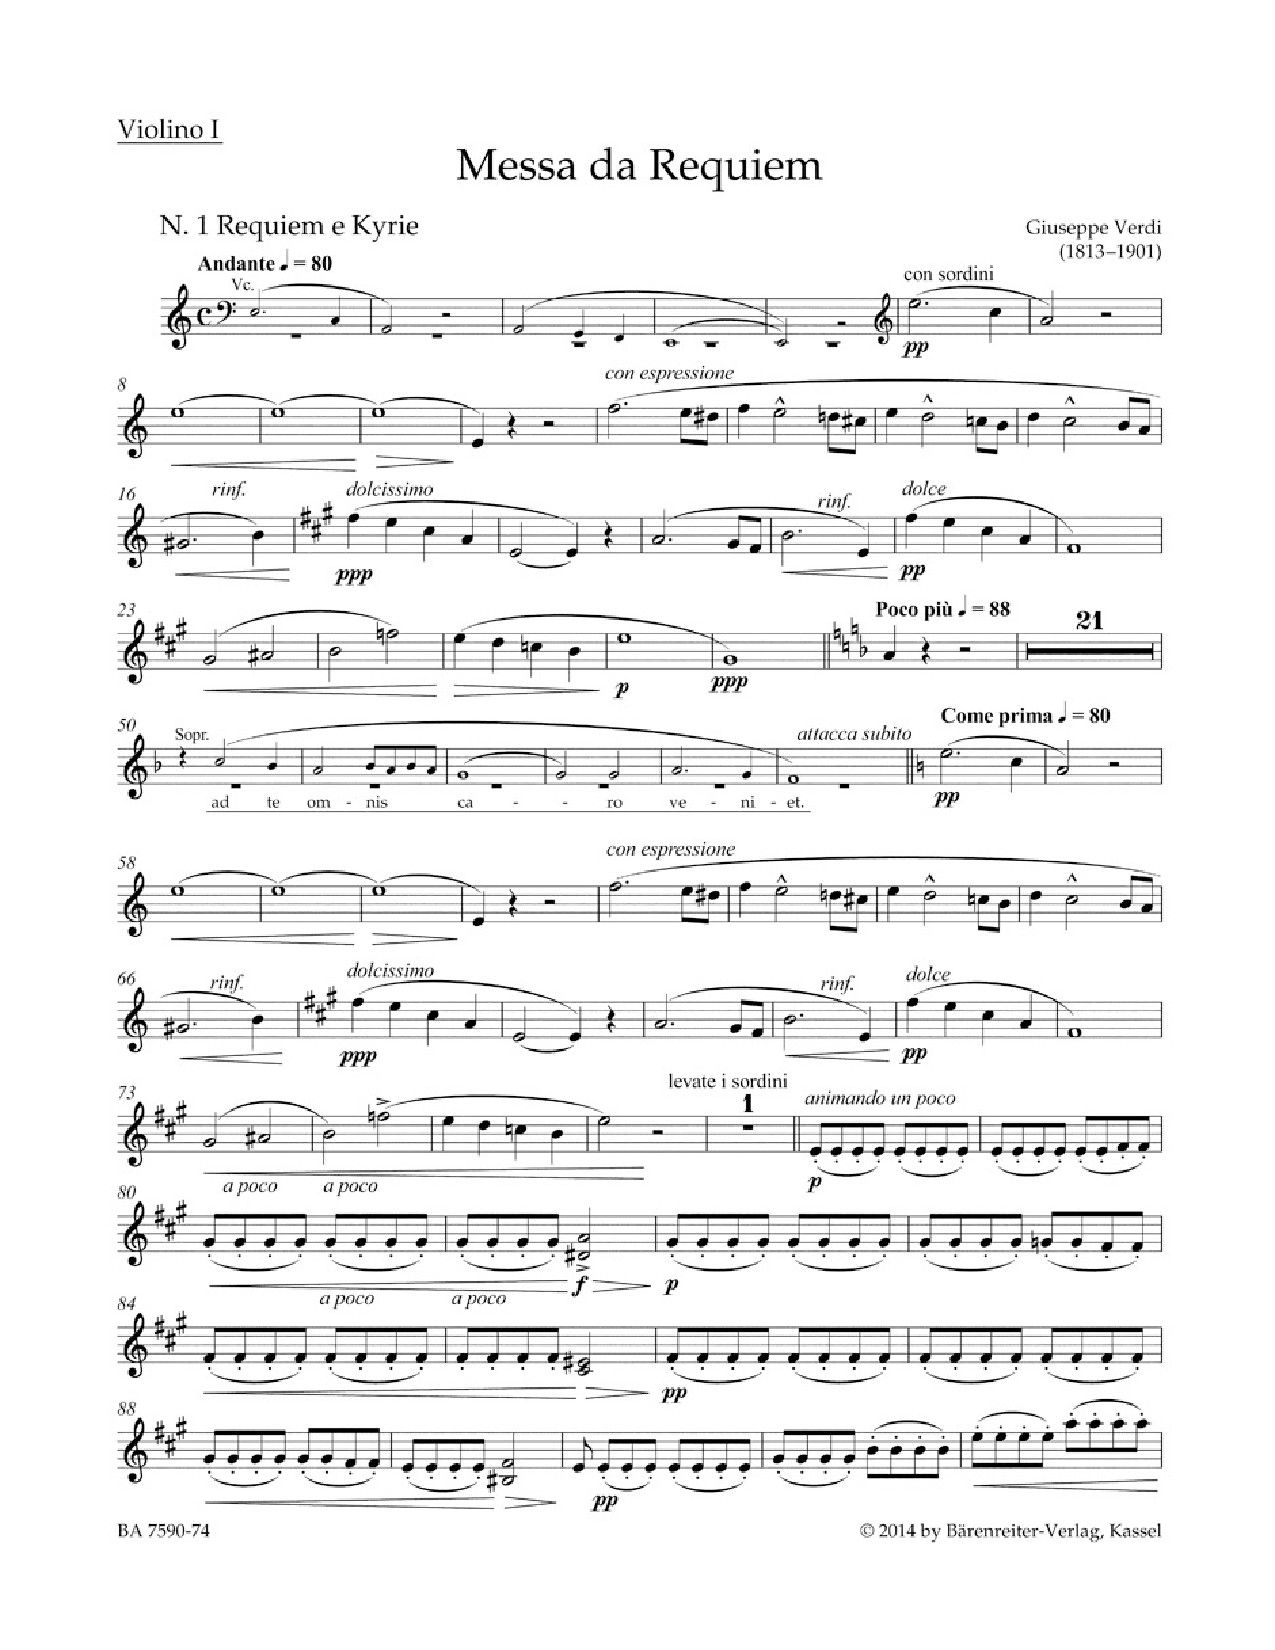 Messa da Requiem Violin 1